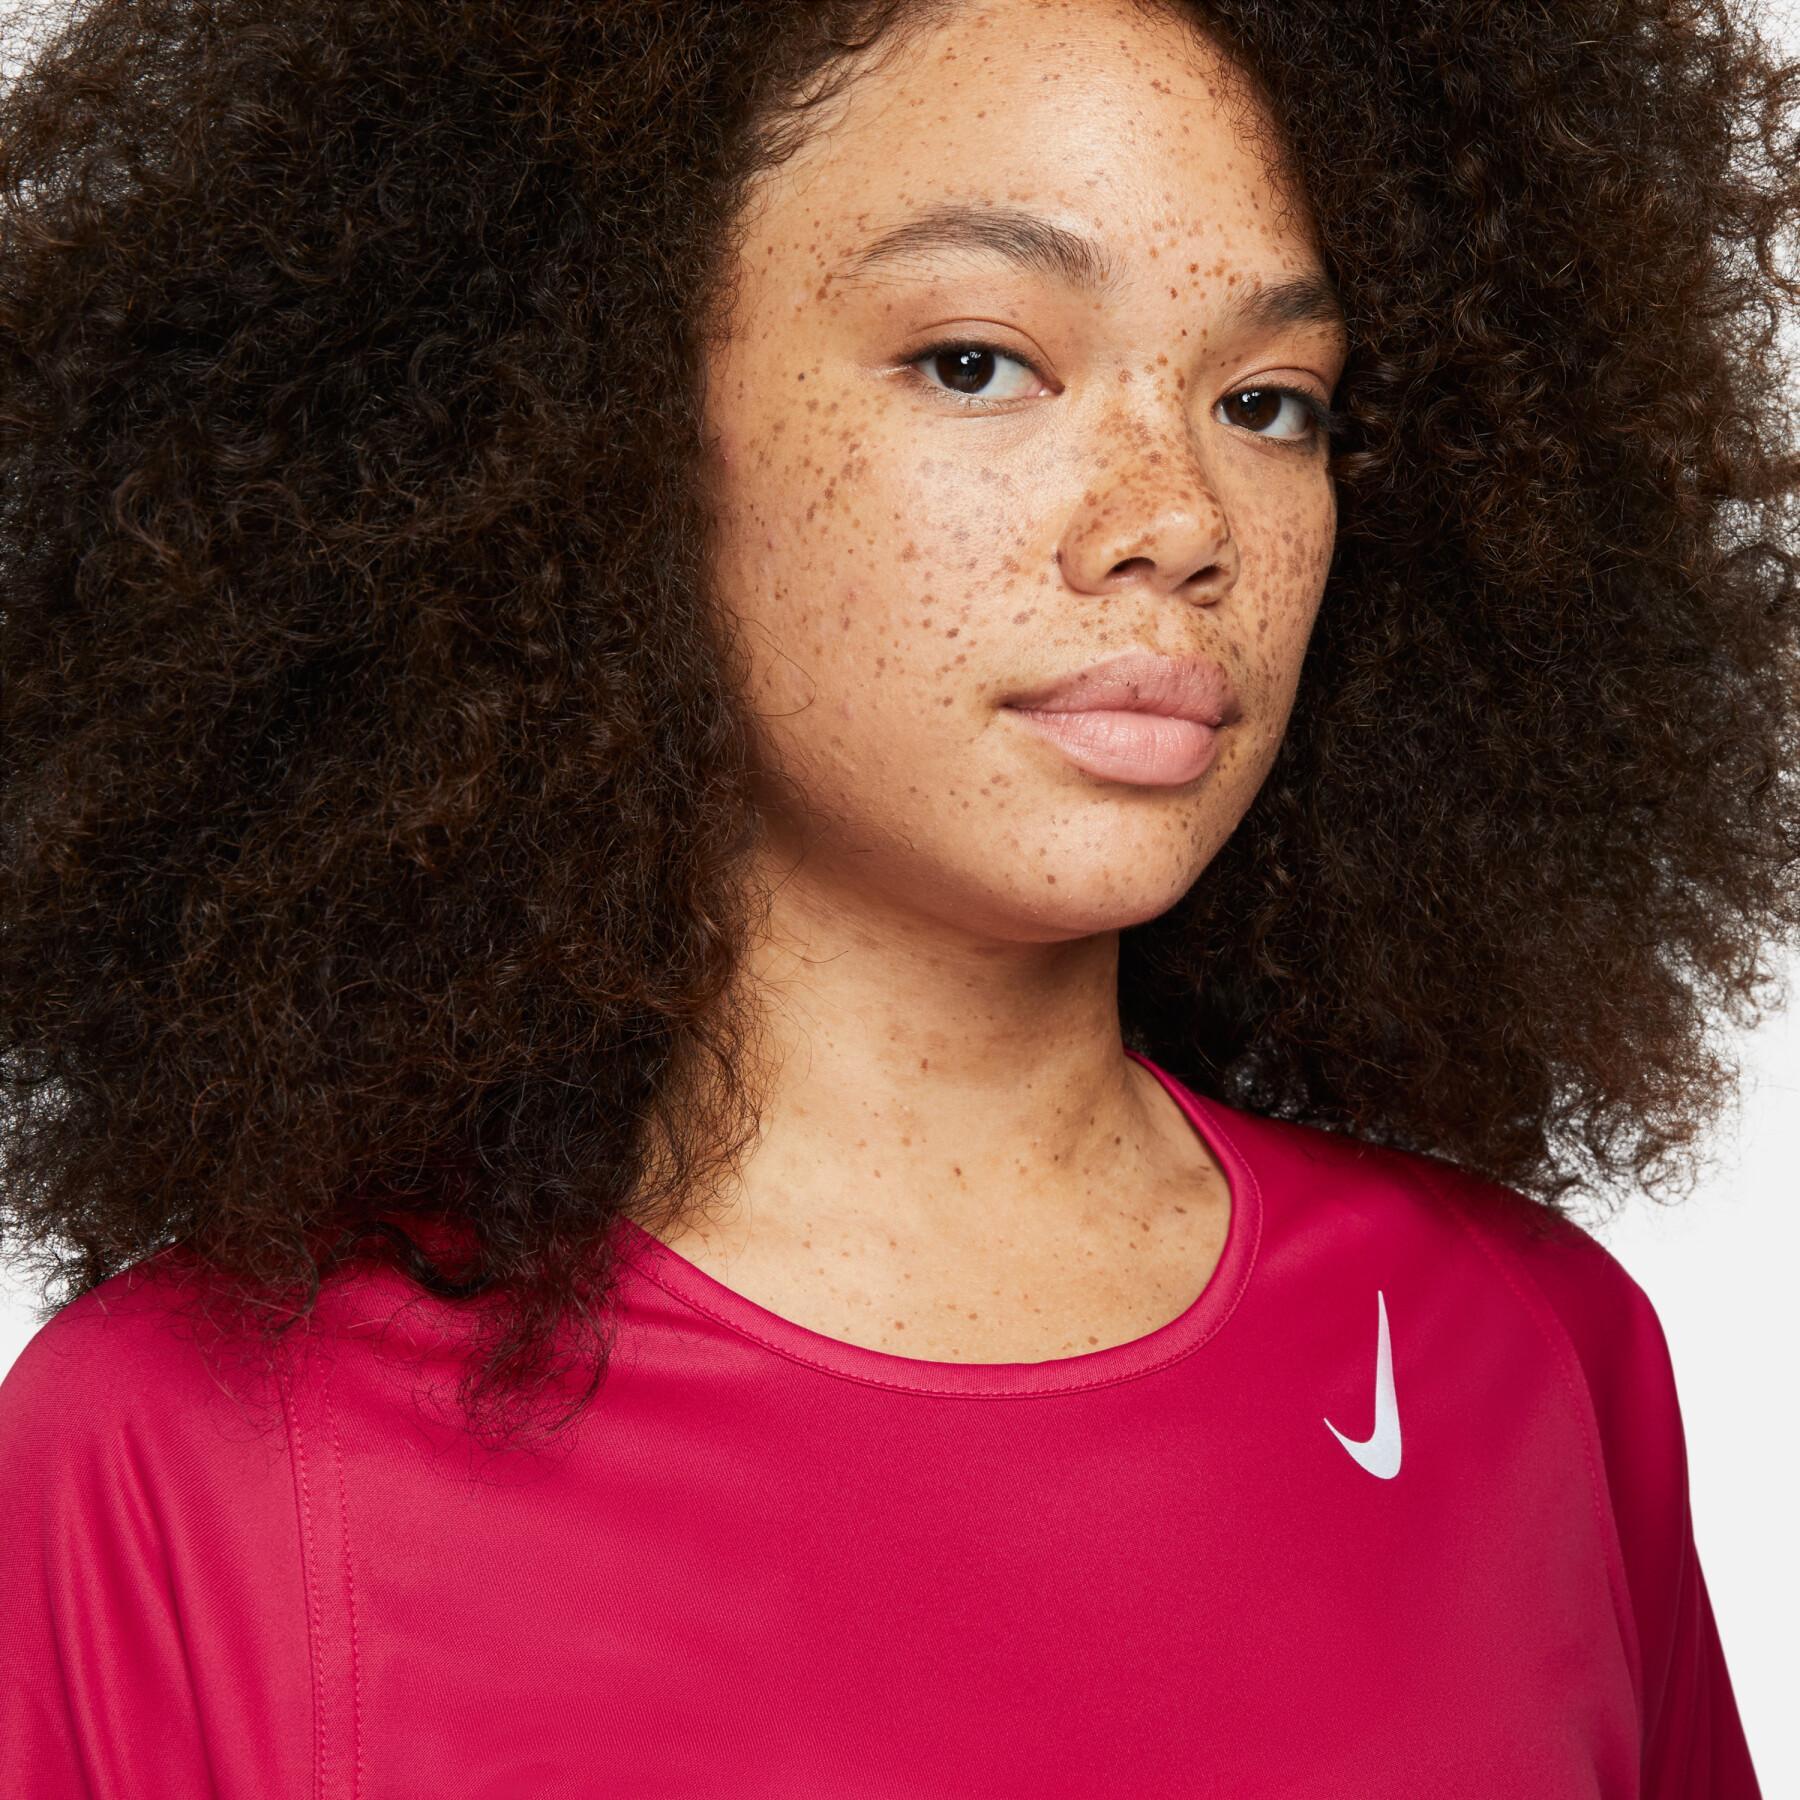 Koszulka damska Nike Dri-FIT Race